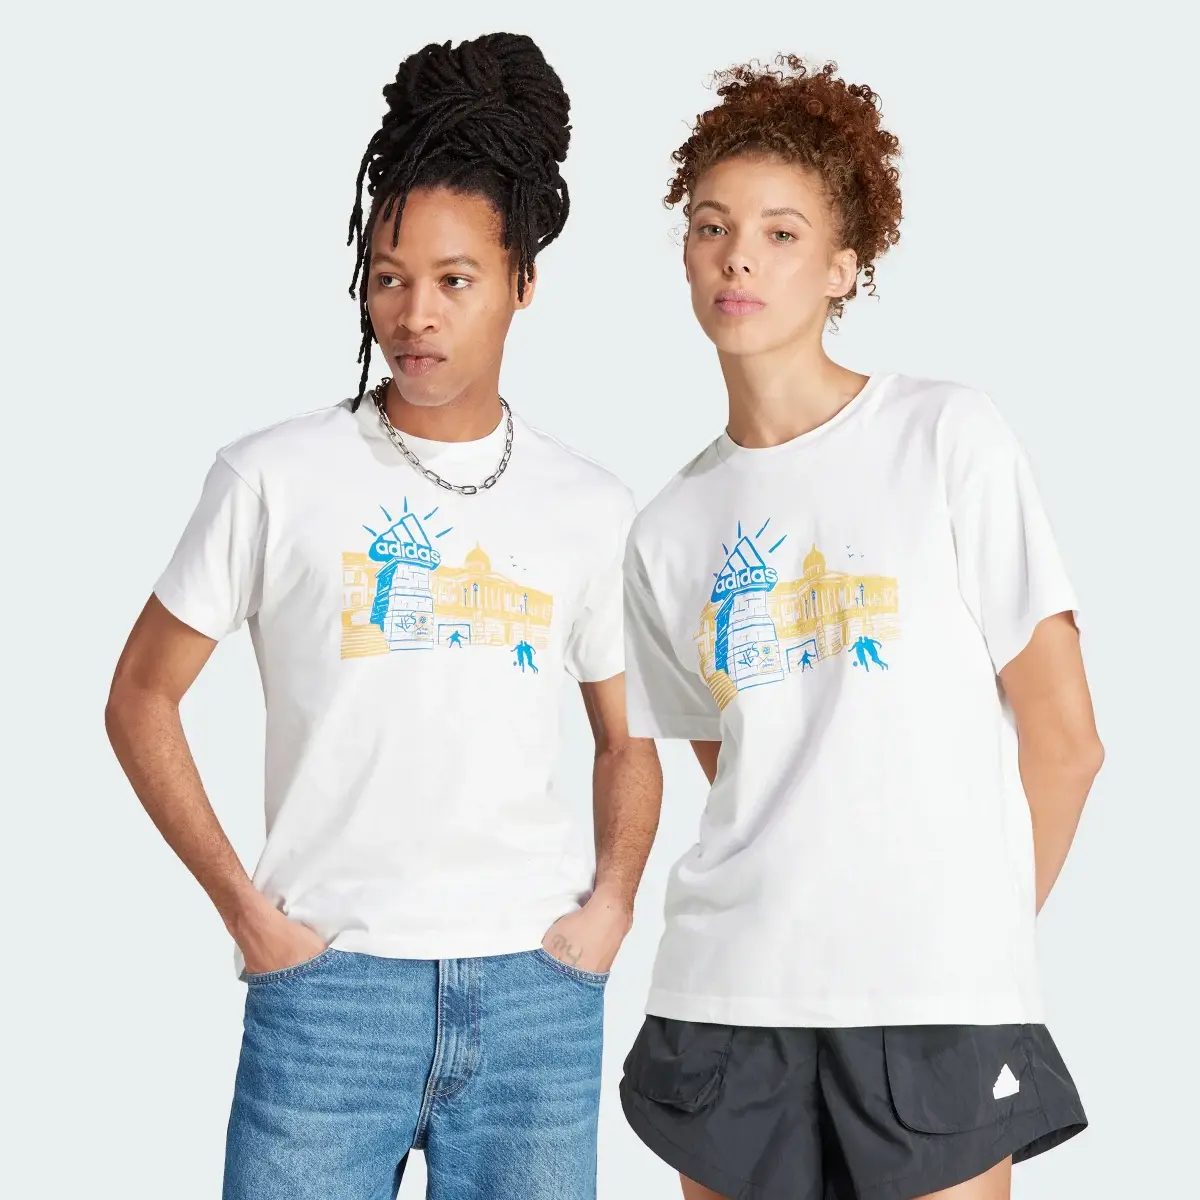 Adidas T-shirt adidas graphique (Non genré). 1